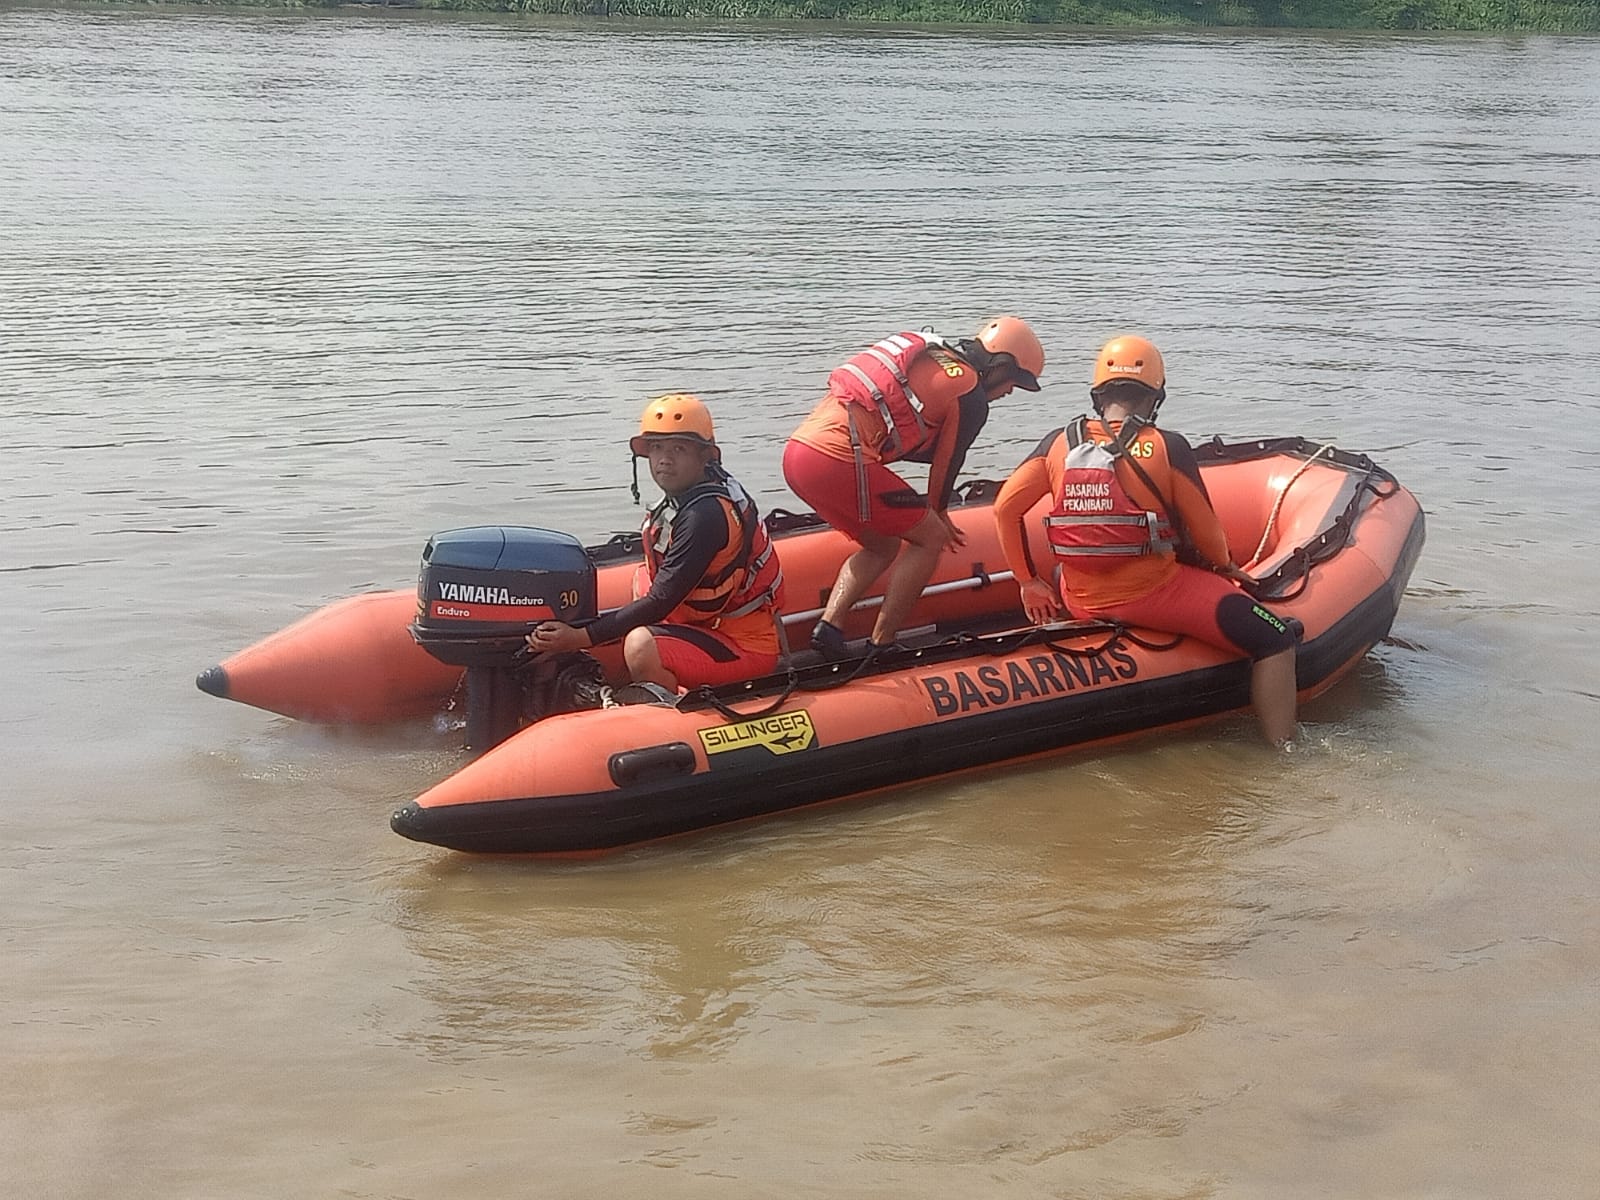 Pencarian korban tenggelam di sungai Kampar